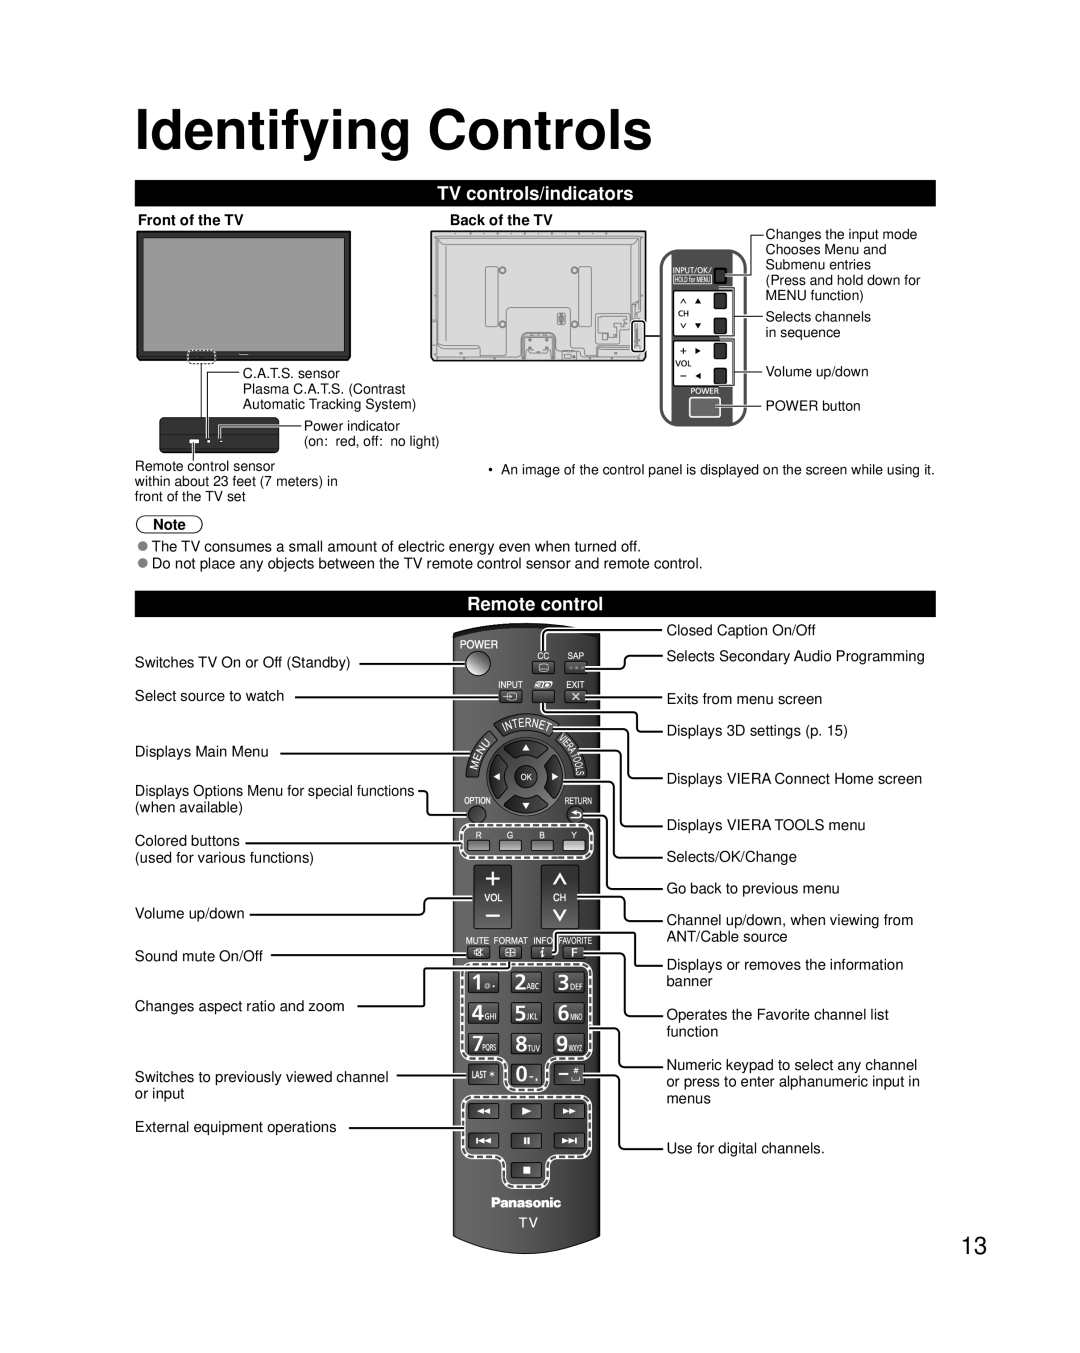 Panasonic TC-P50UT50 Identifying Controls, TV controls/indicators, Remote control, Front of the TV, Back of the TV 